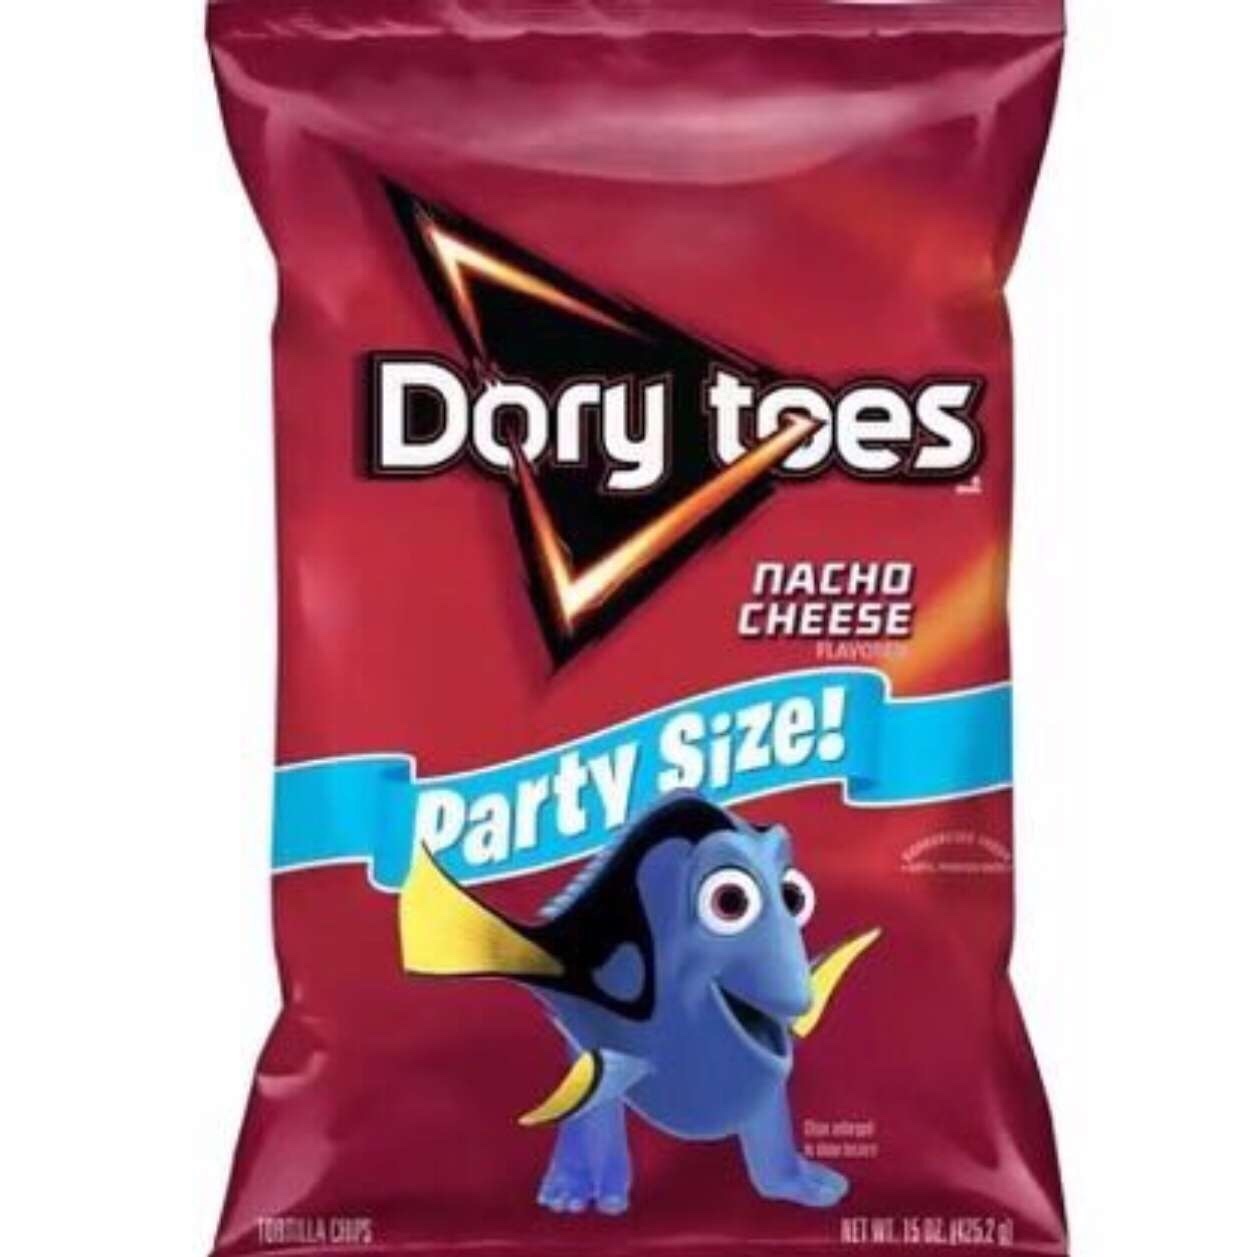 I’d suck dory’s toes - meme